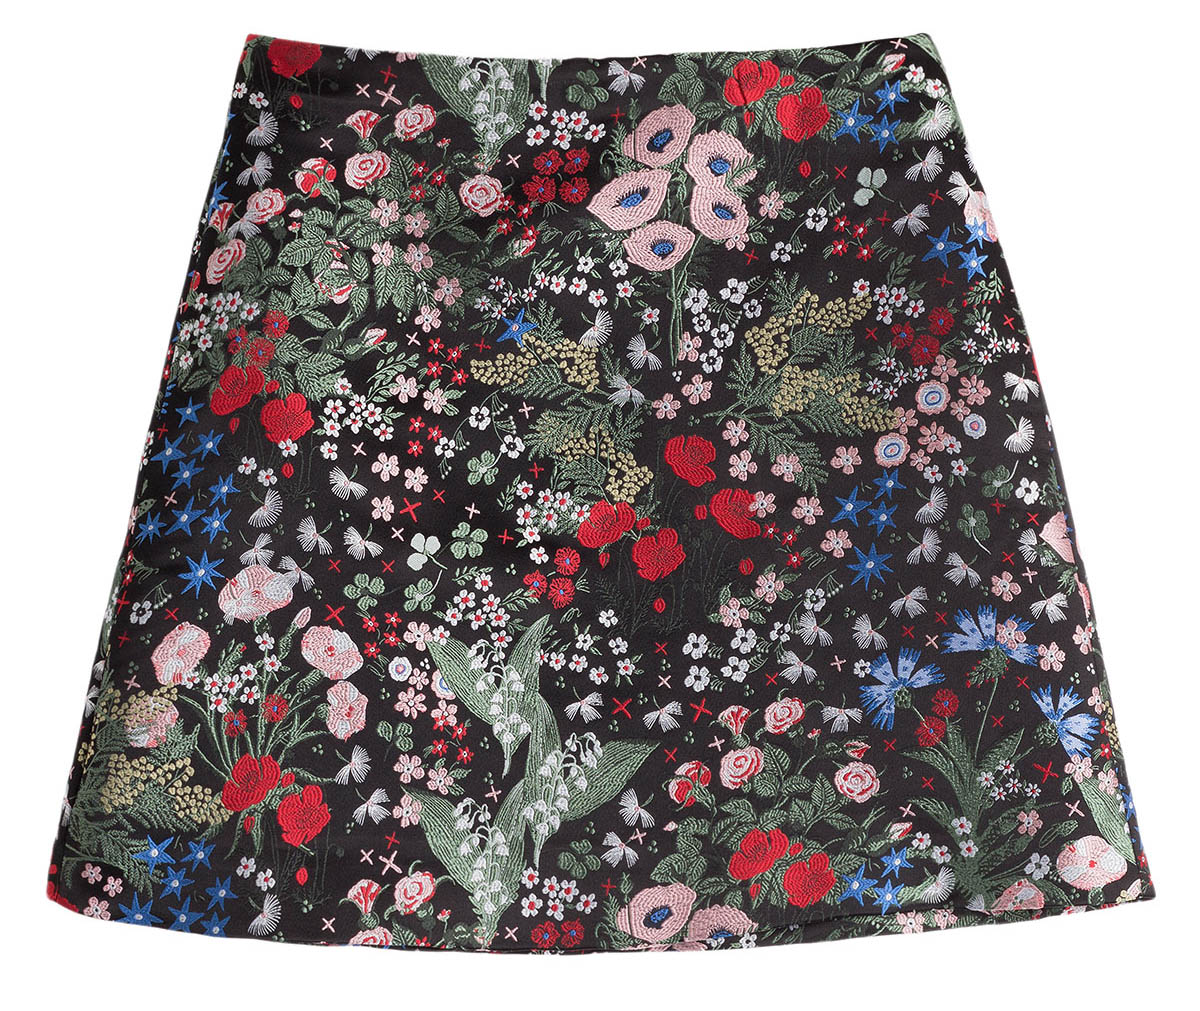 Valentino jacquard skirt Celia Birtwell print inspired by Sandro Botticelli Primavera painting